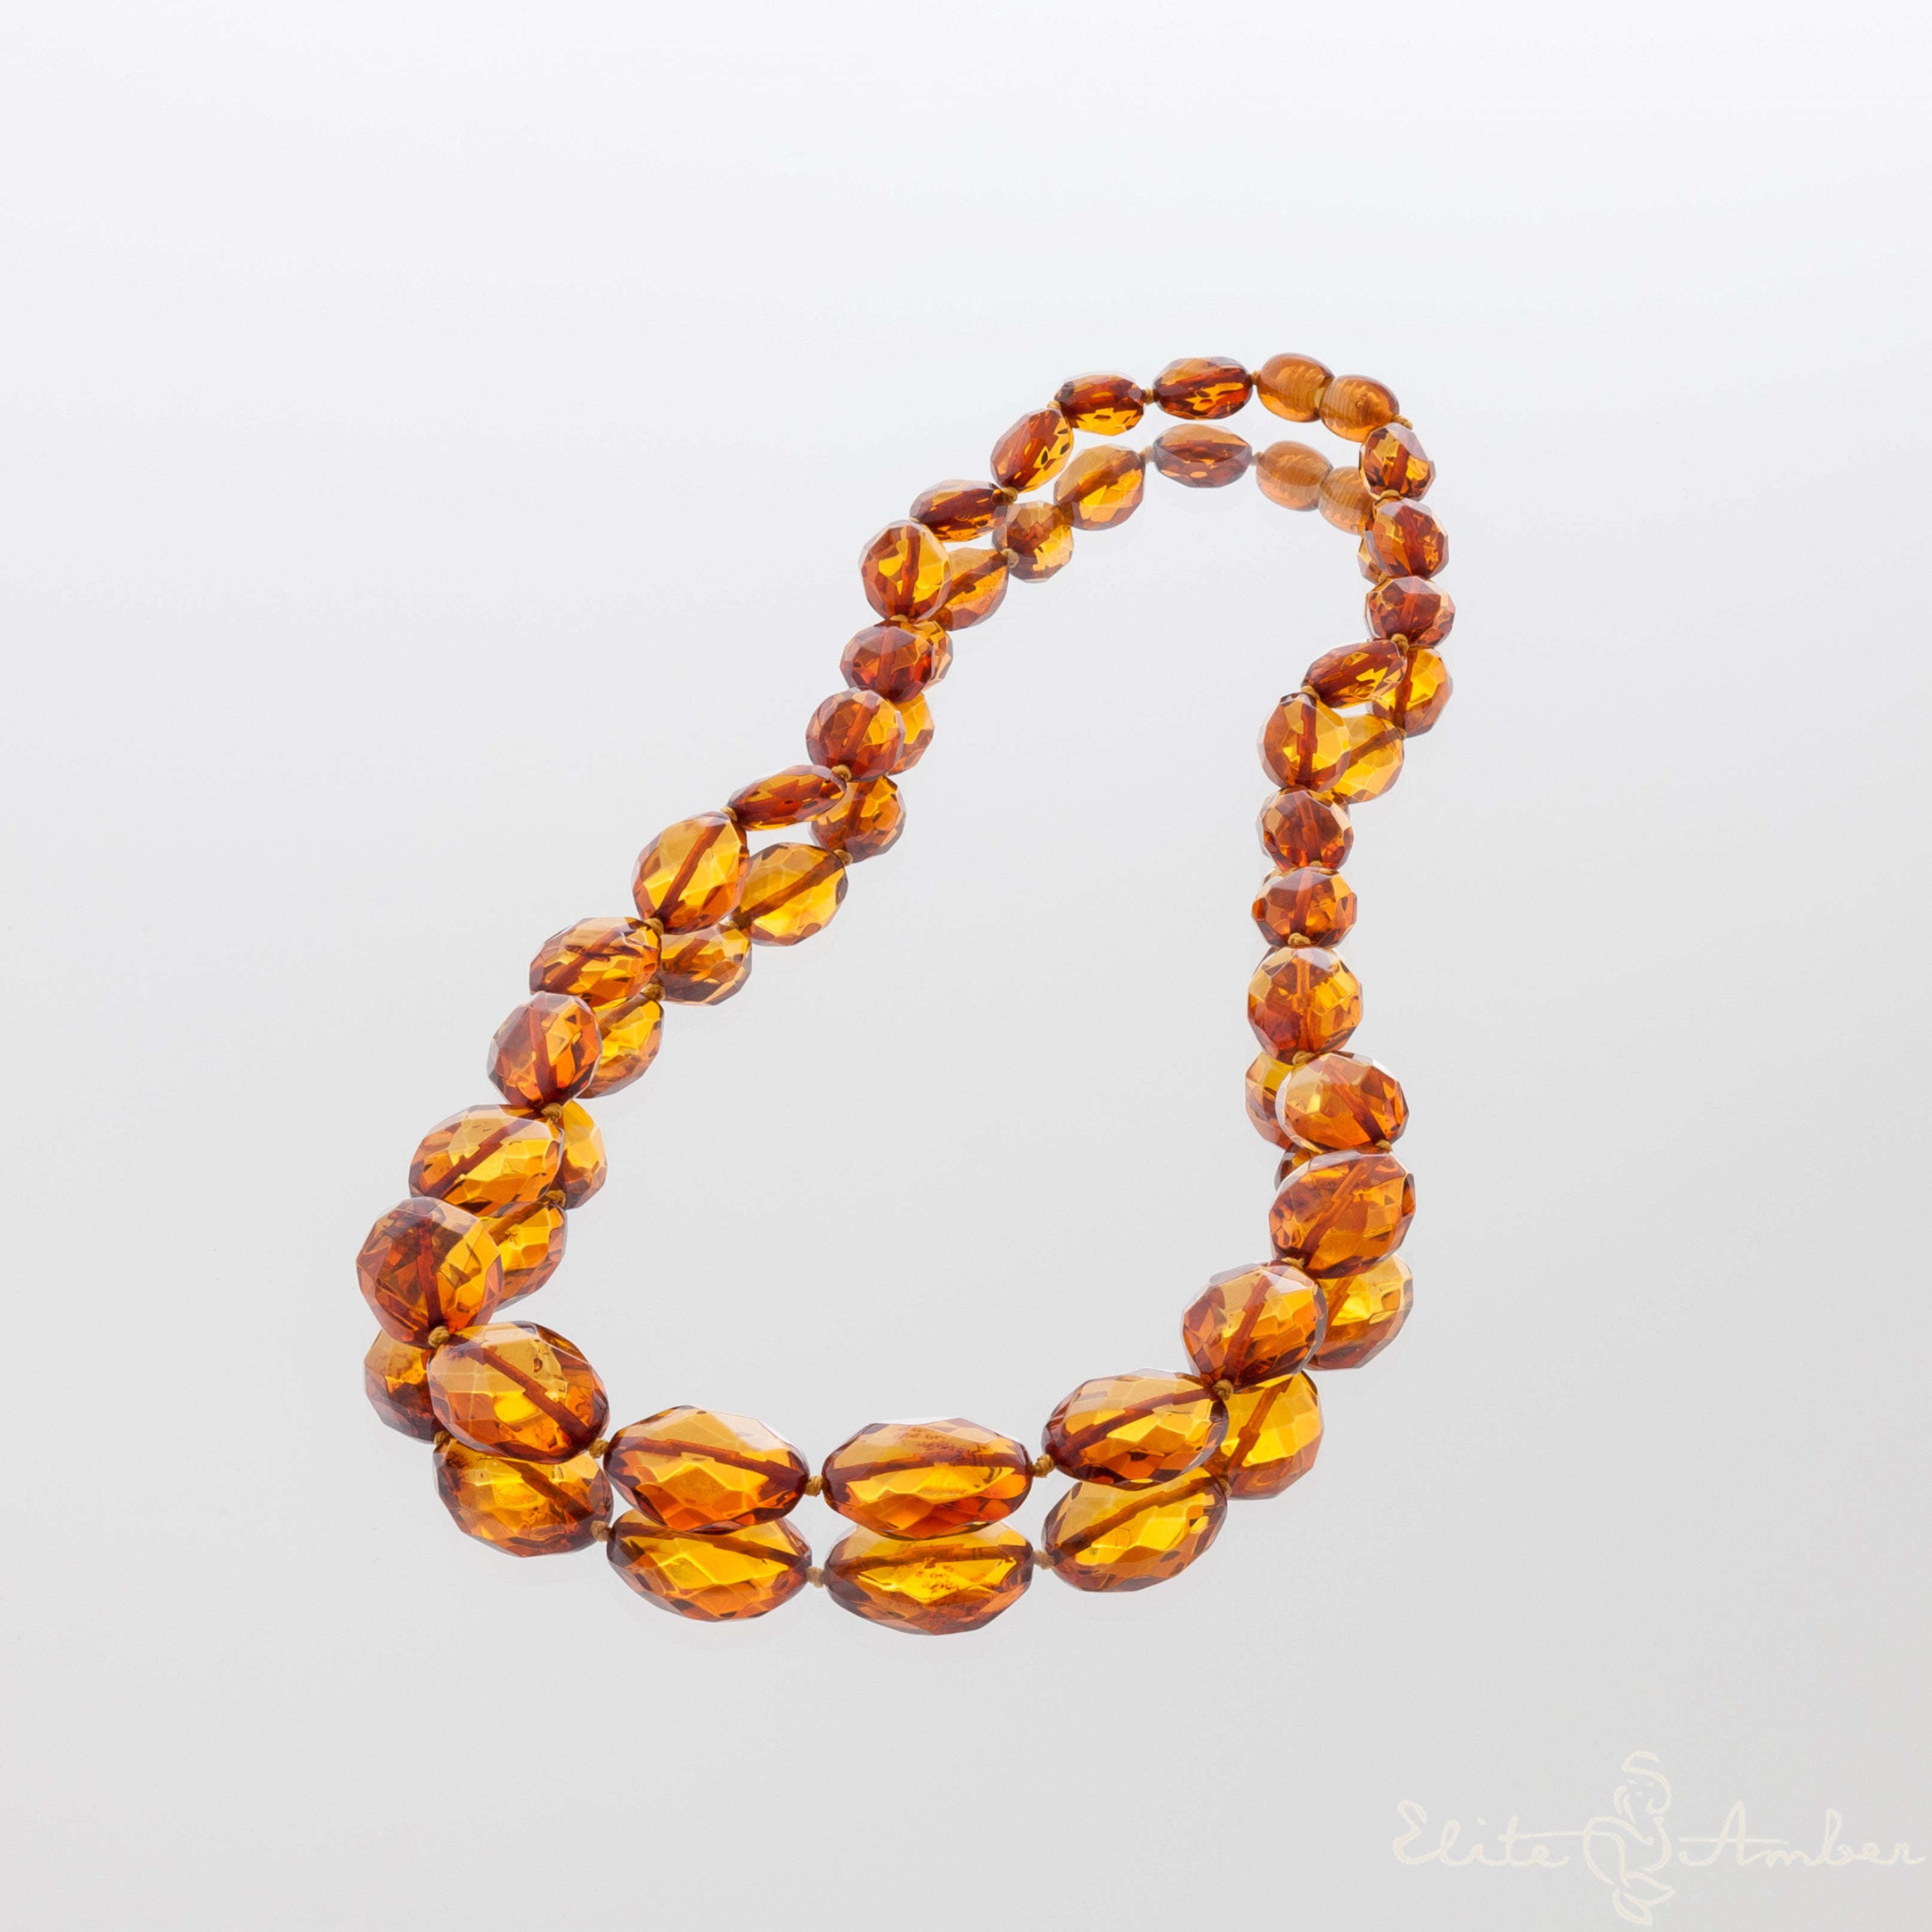 Amber necklace "Cognac diamond"